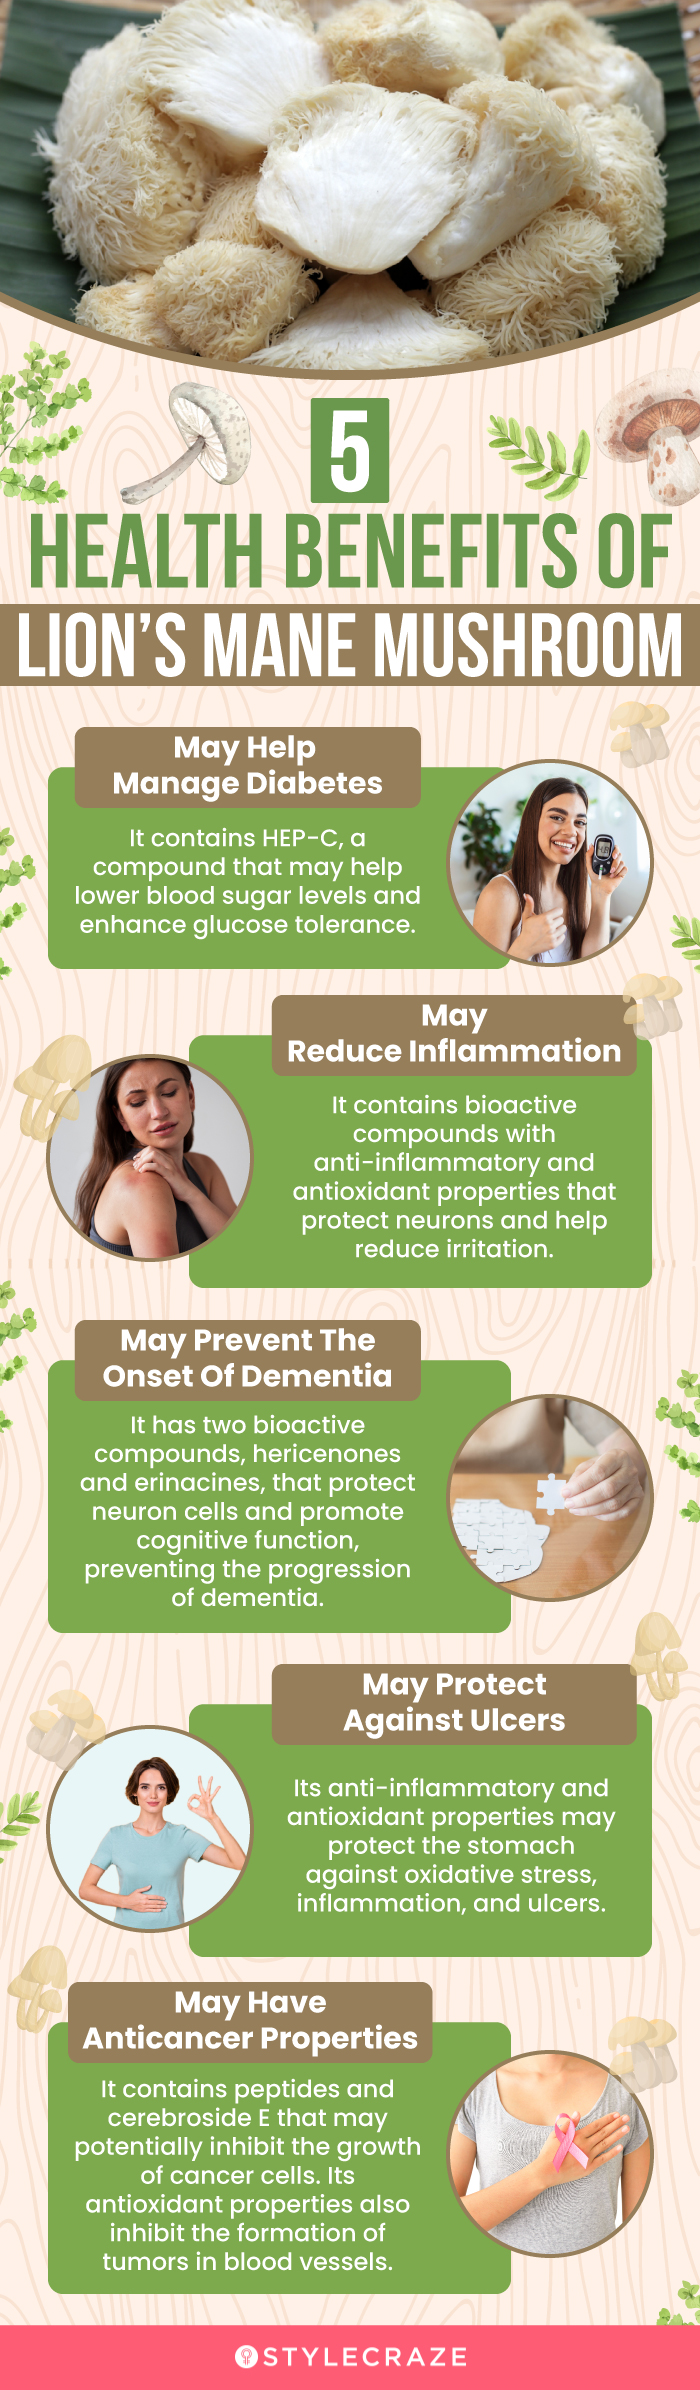 5 health benefits of lion’s mane mushroom (infographic)